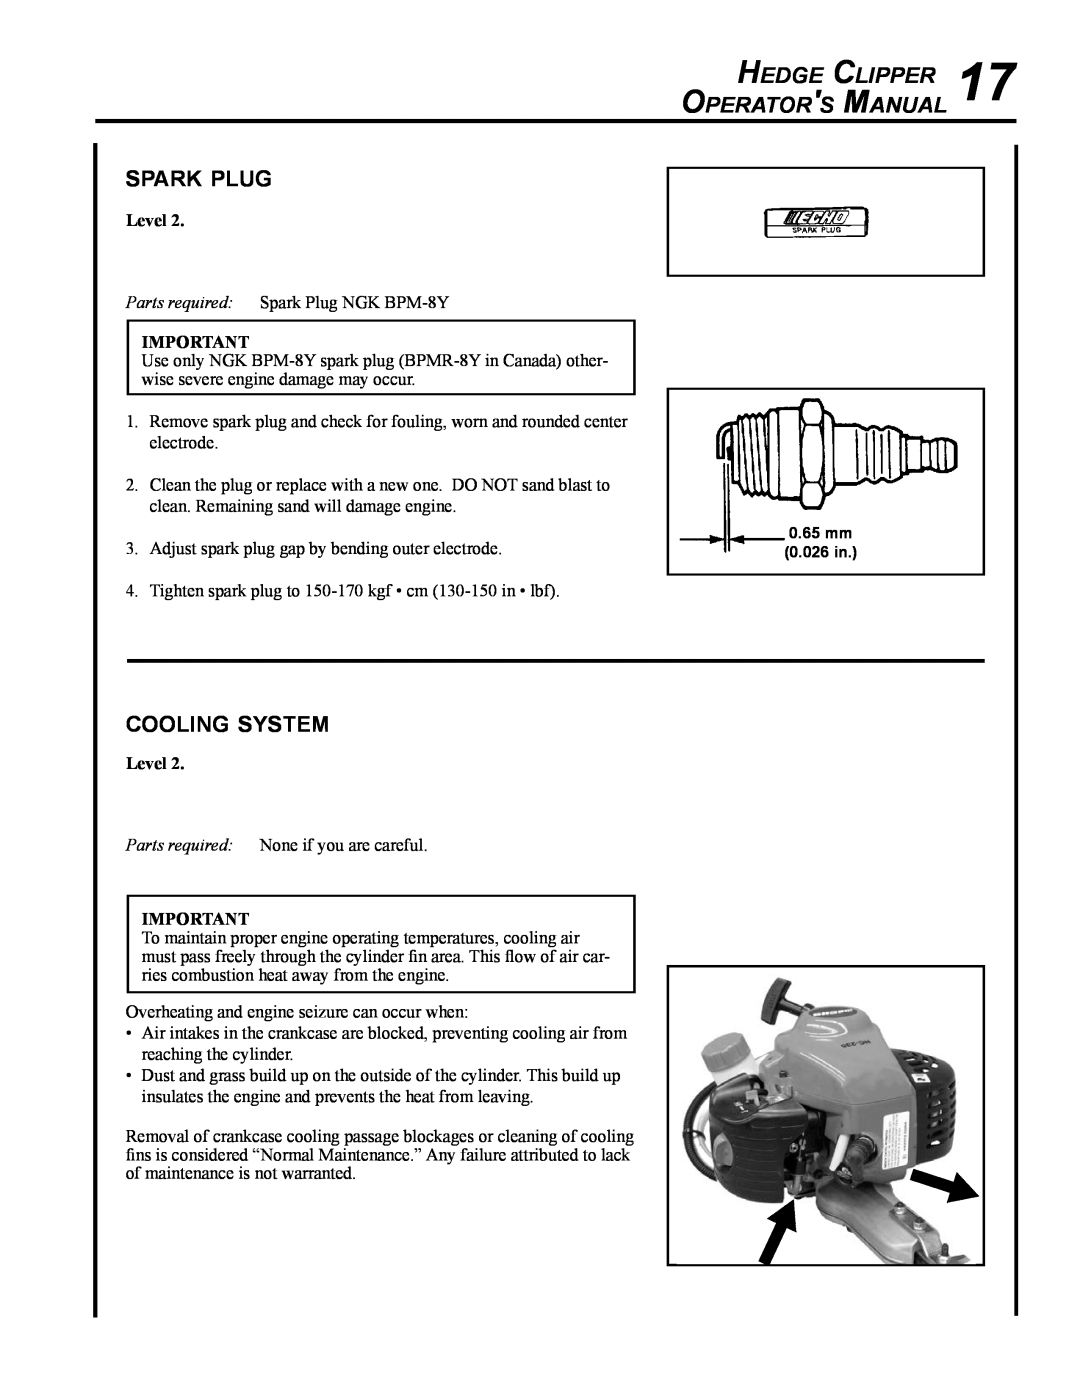 Echo HC-235 manual spark plug, cooling system, Hedge Clipper Operators Manual 